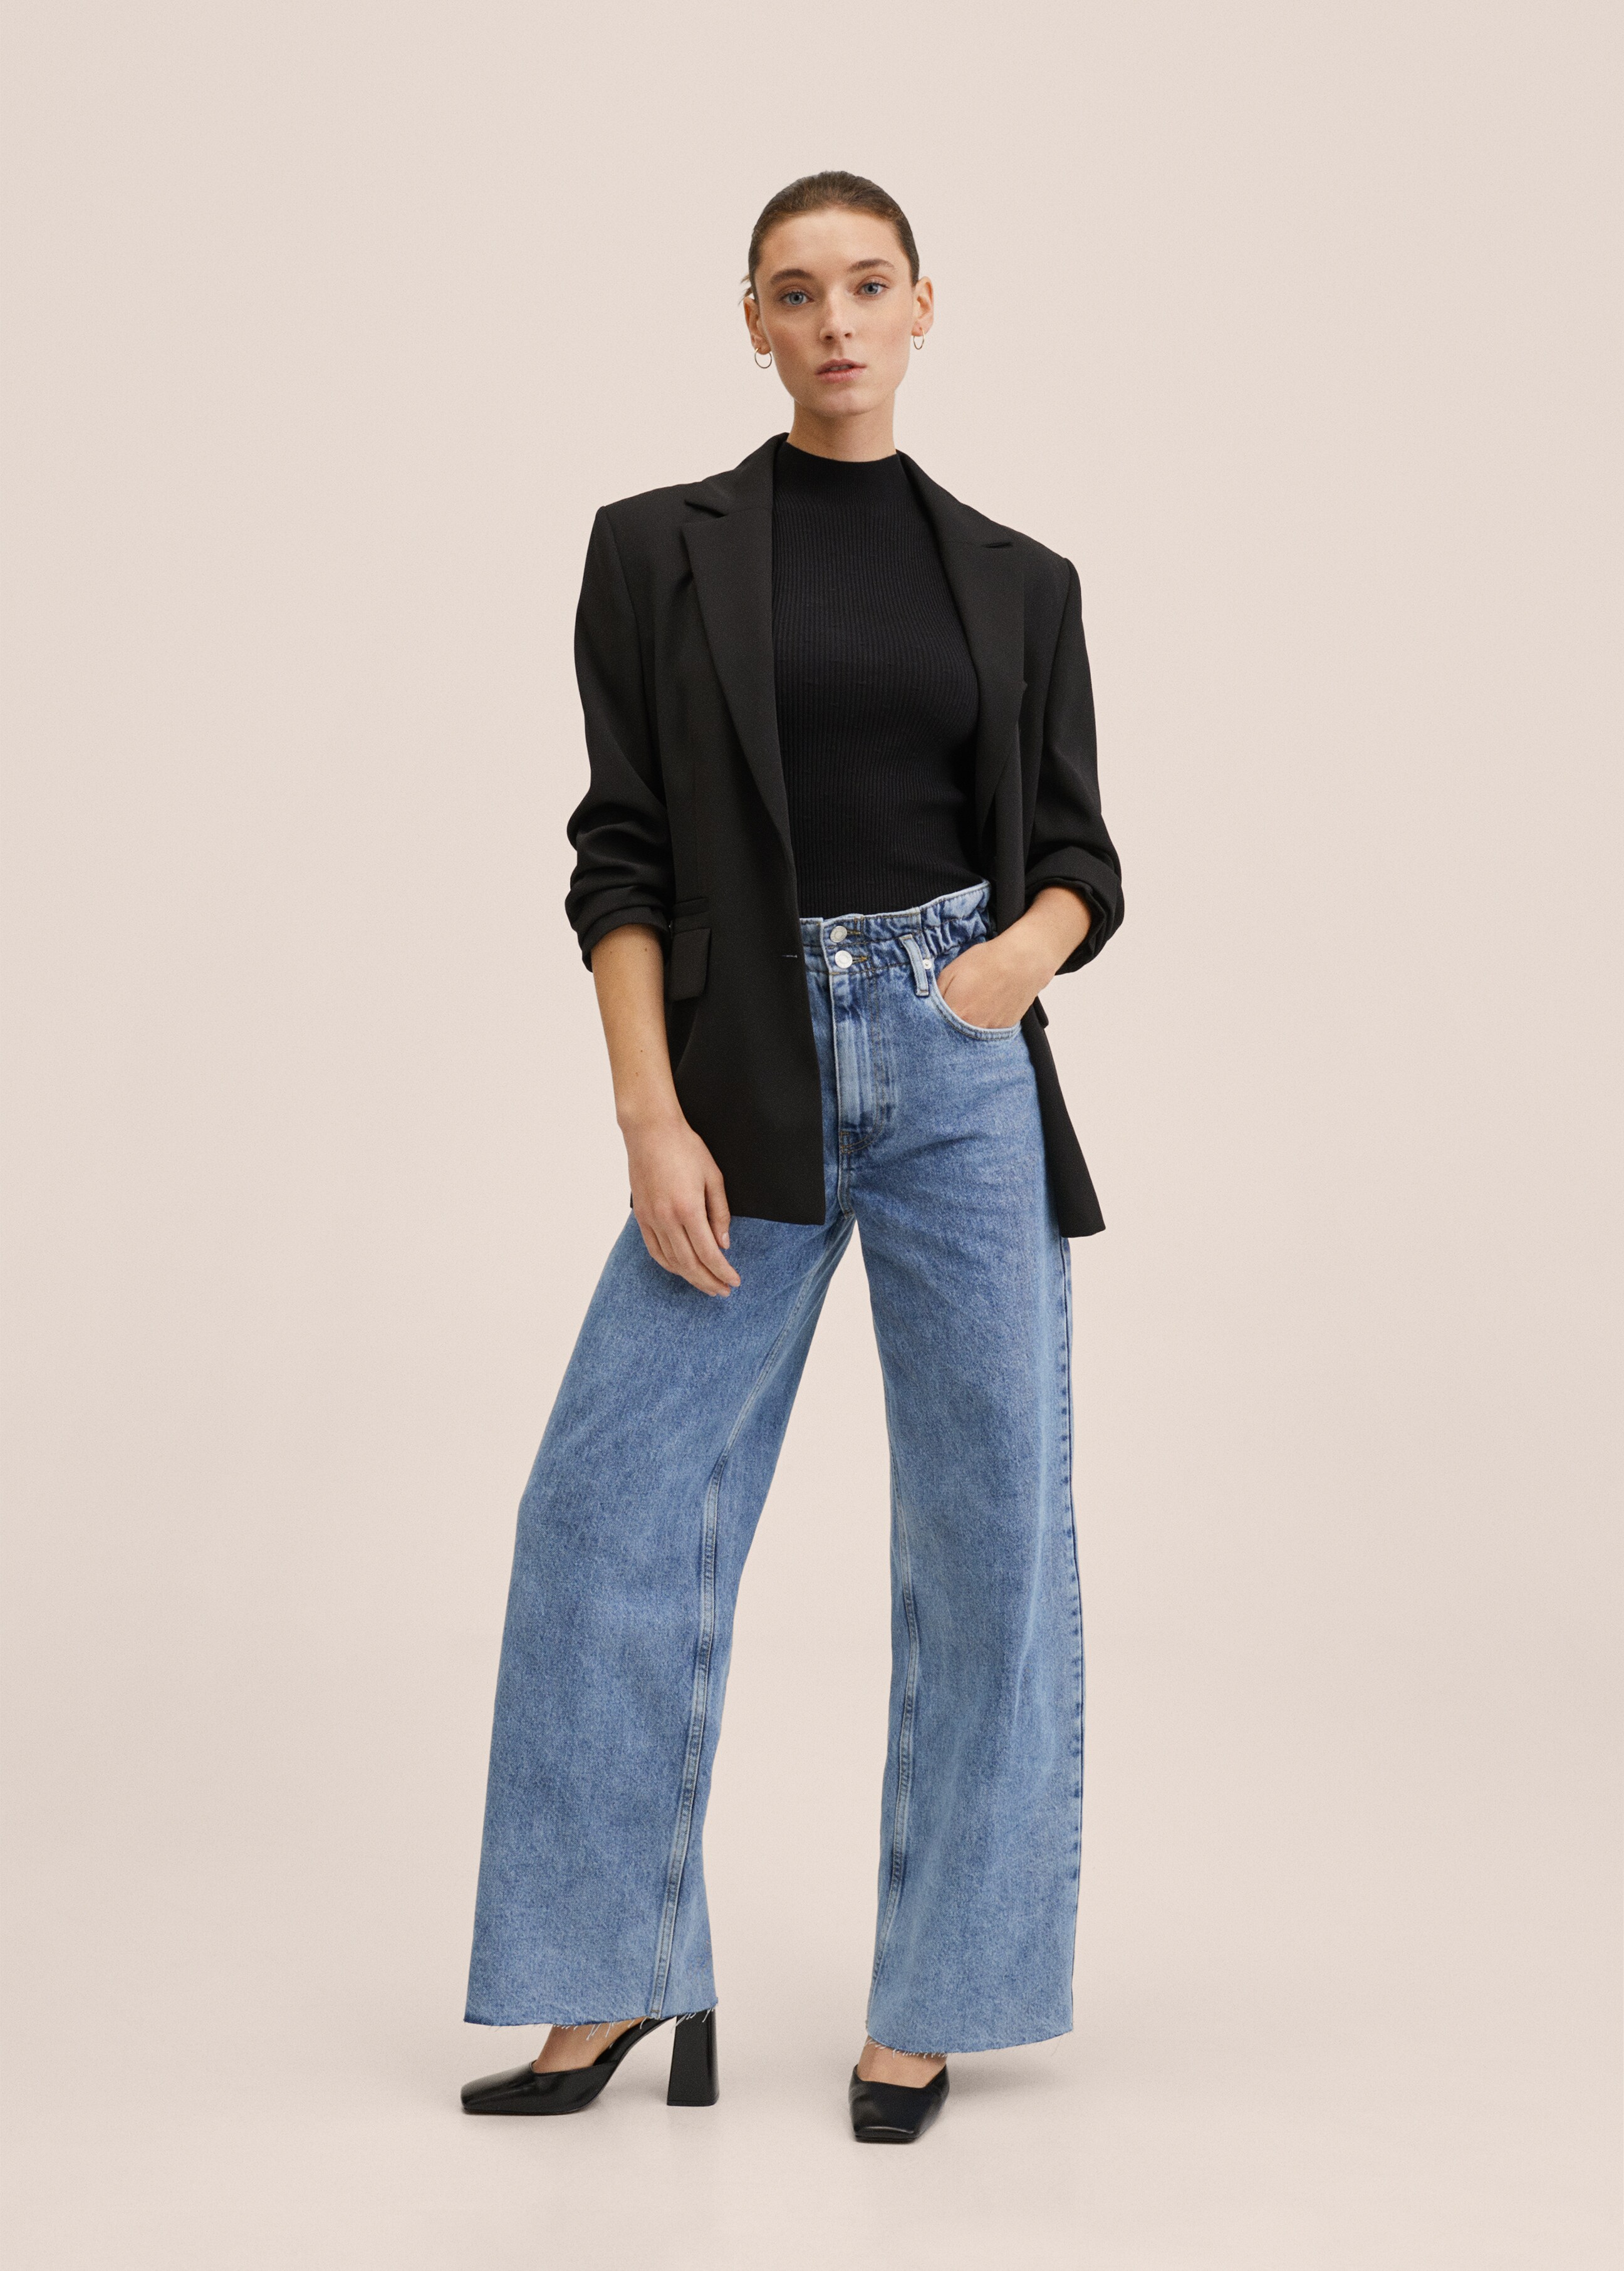 Wideleg elastic waist jeans - General plane